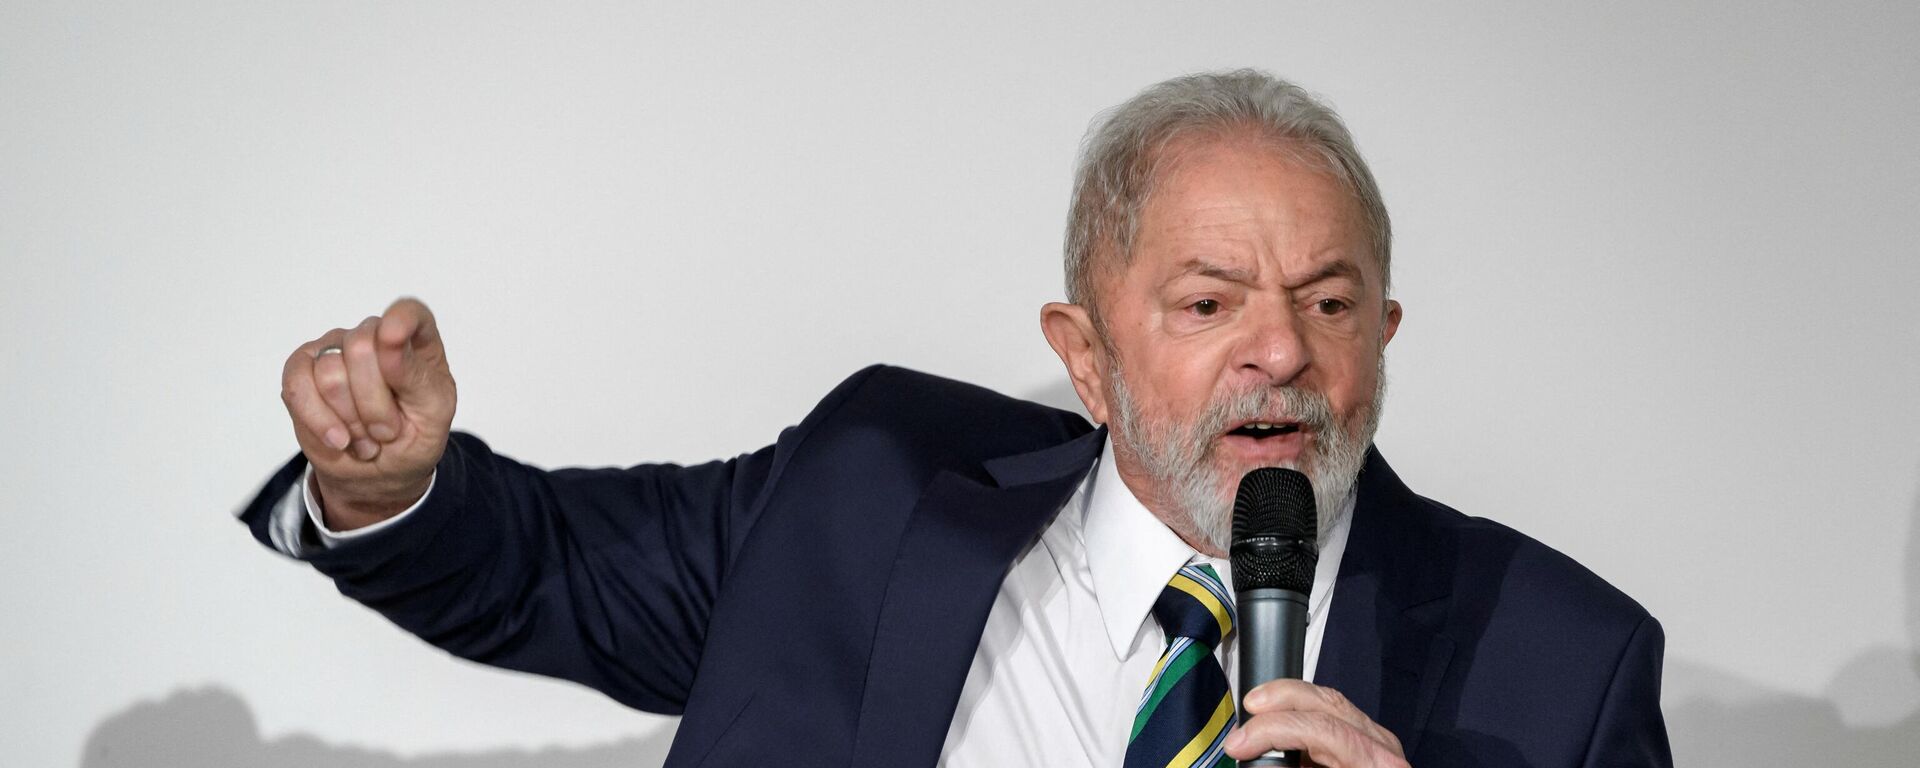 Luiz Inácio Lula da Silva , expresidente de Brasil - Sputnik Mundo, 1920, 29.06.2021